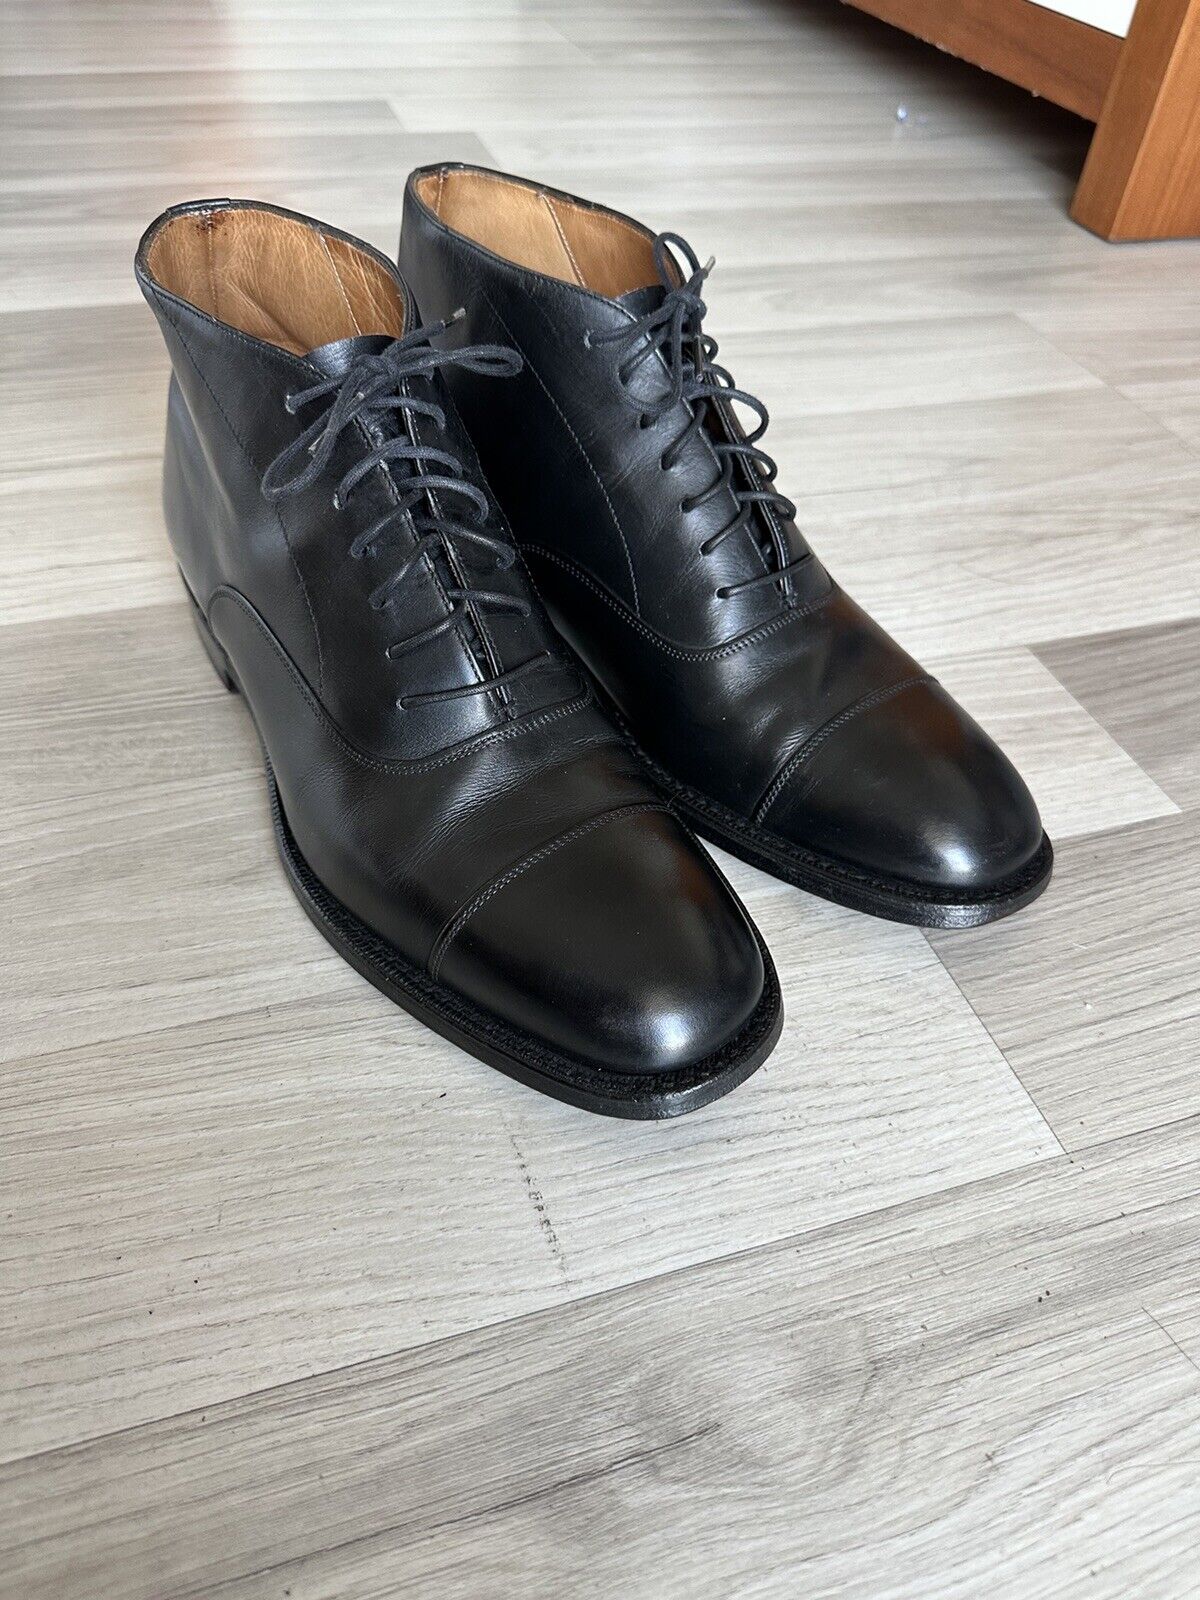 Church’s Black Custom Grade Cap Toe Oxford Boot Men’s Shoes UK 8.5 US 9.5 Narrow